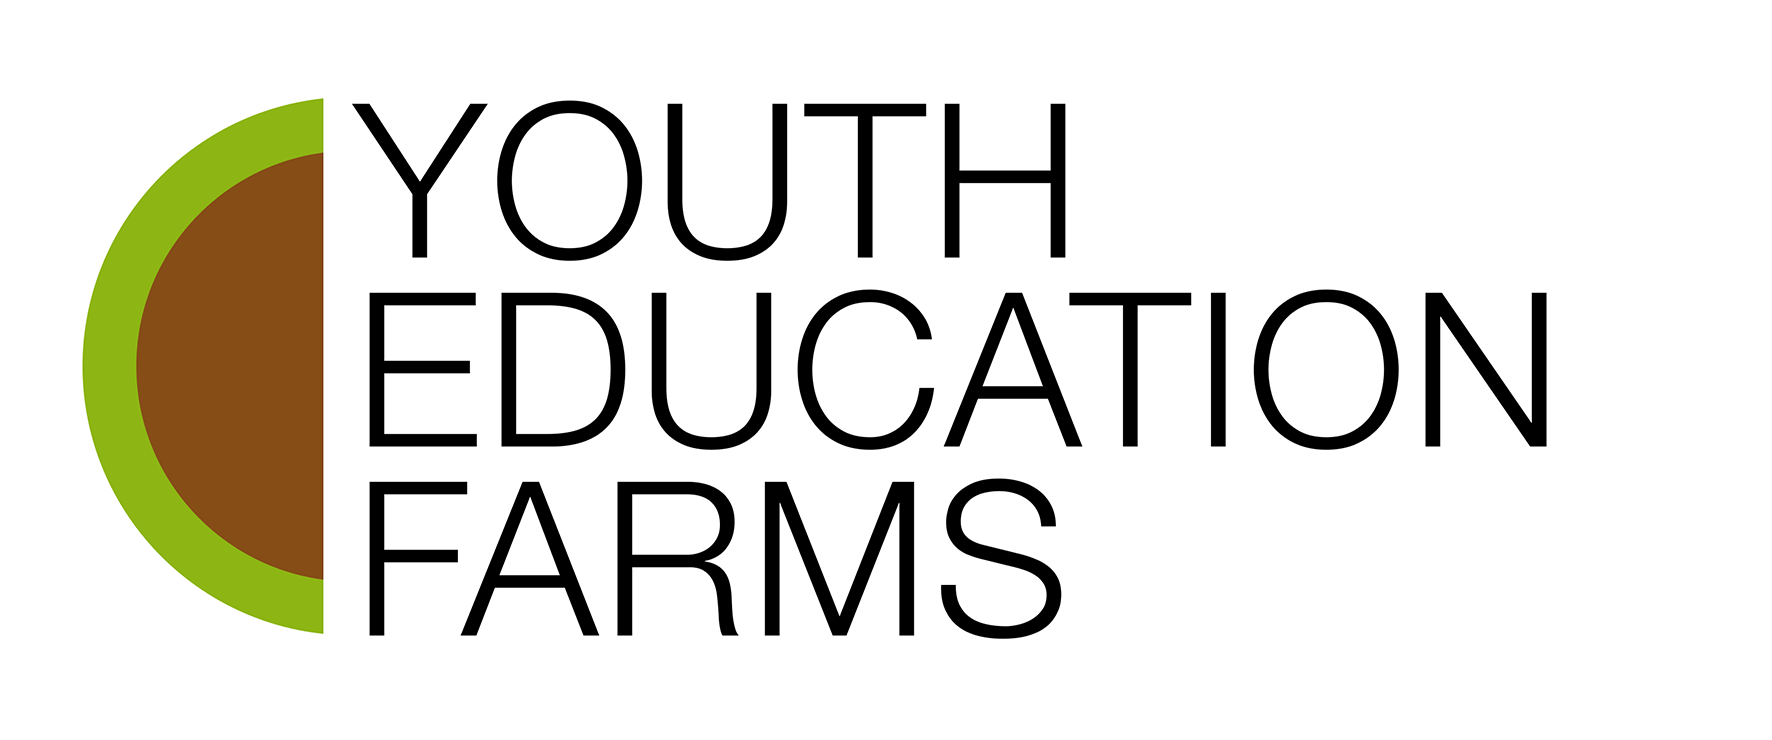 Youth Education Farms